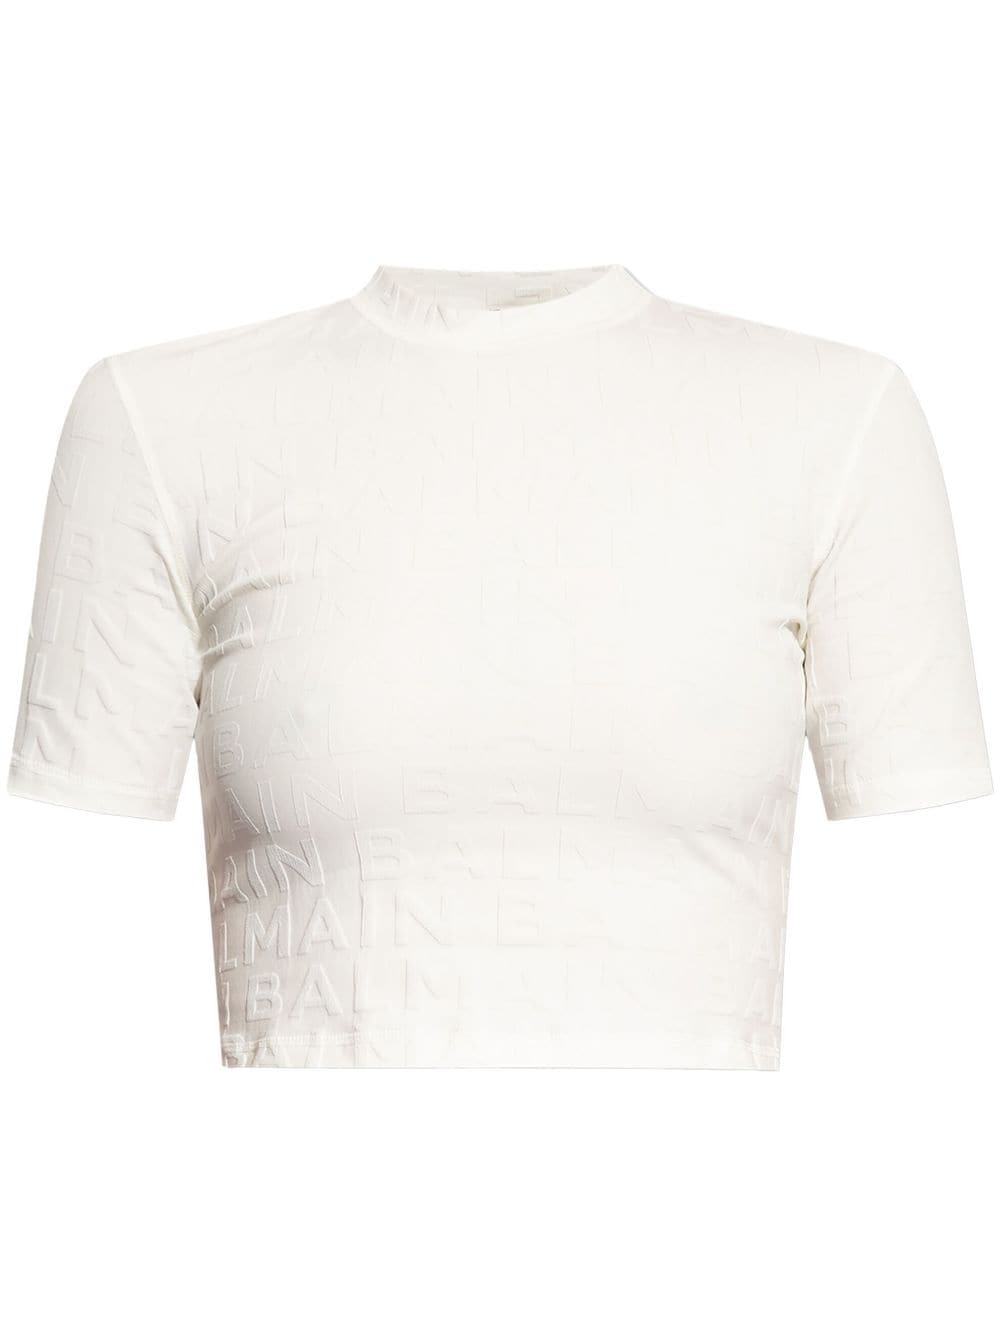 Balmain embossed monogram cropped t-shirt - White von Balmain